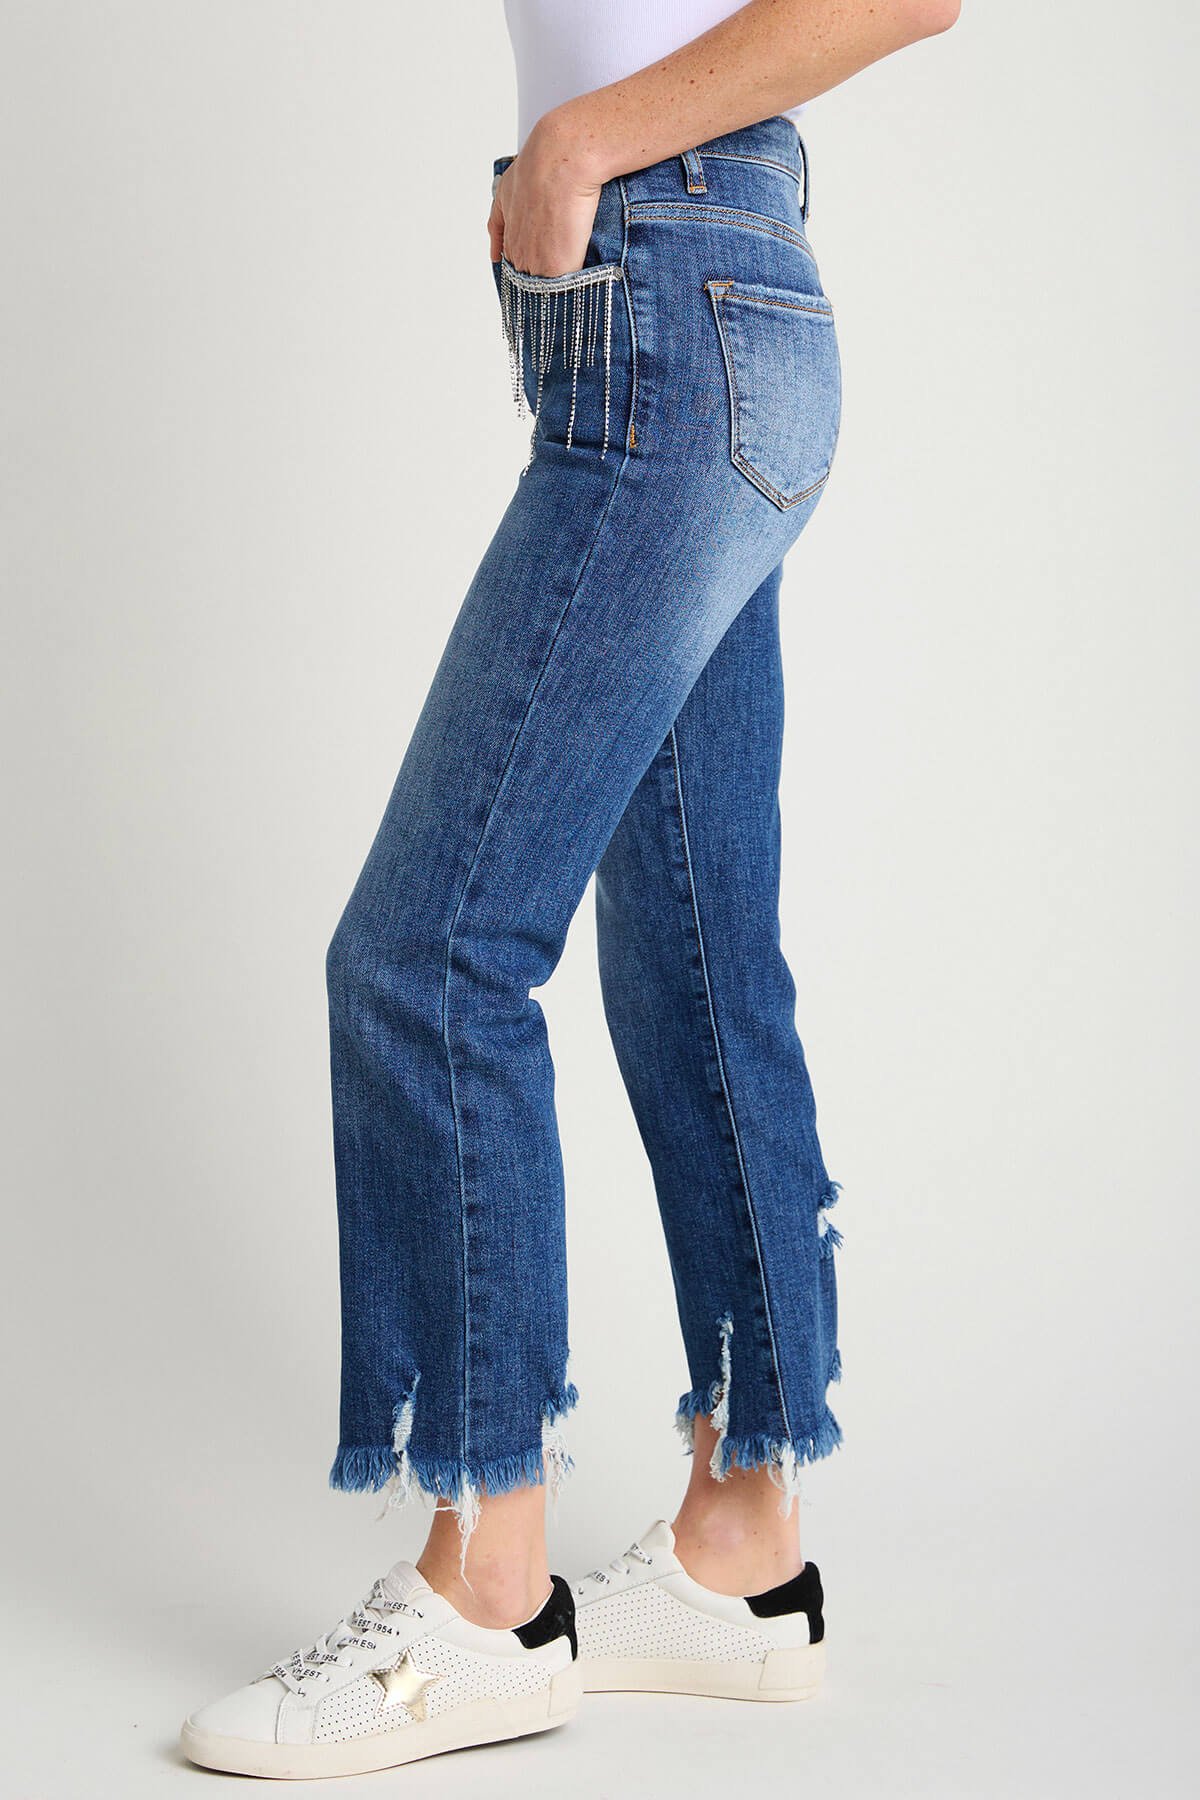 Risen Rhinestone Pocket Jeans